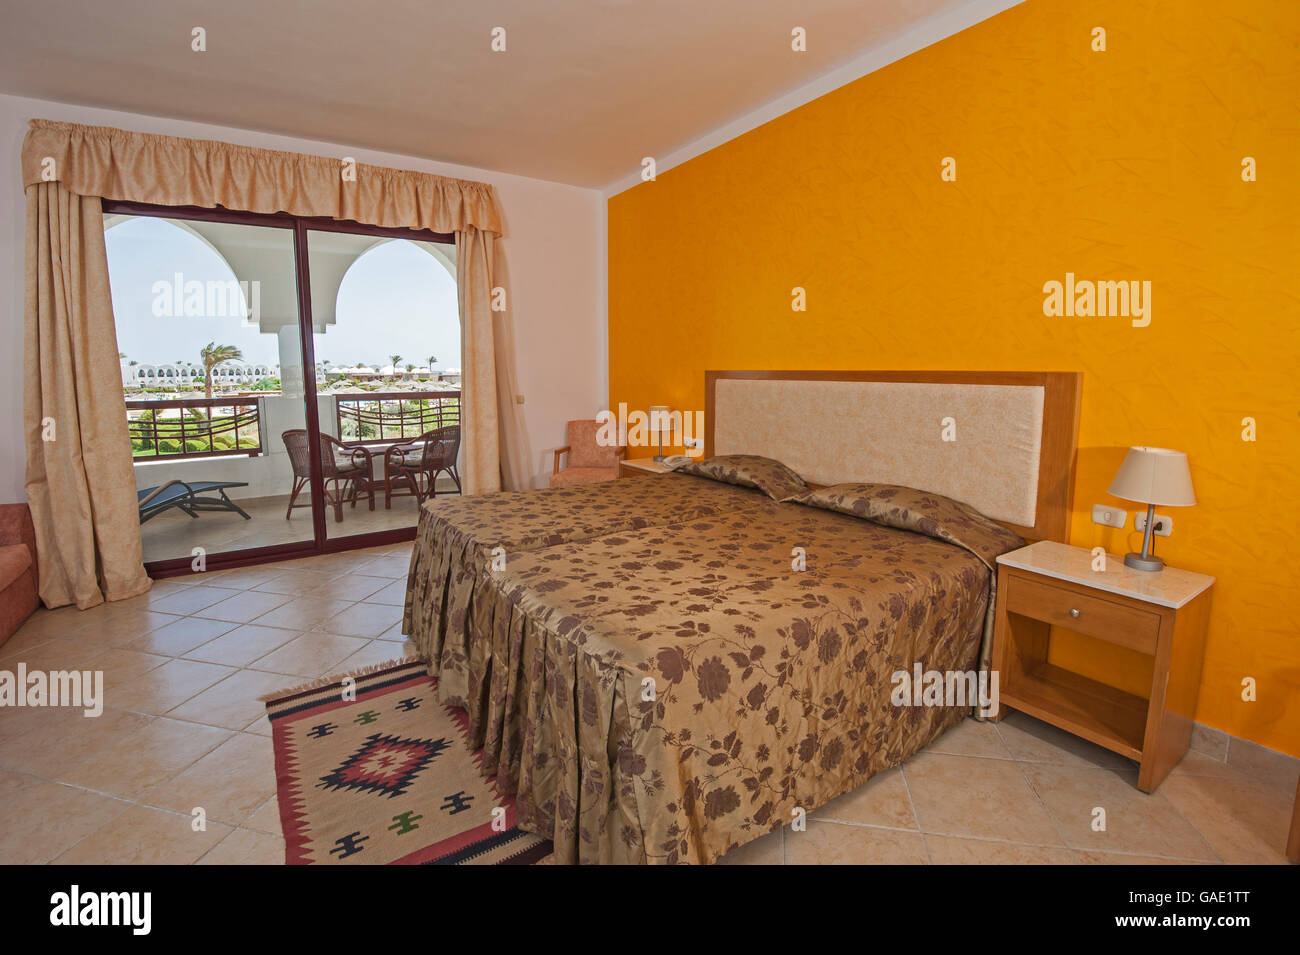 Interior design of a luxury tropical hotel resort bedroom with balcony patio area Stock Photo